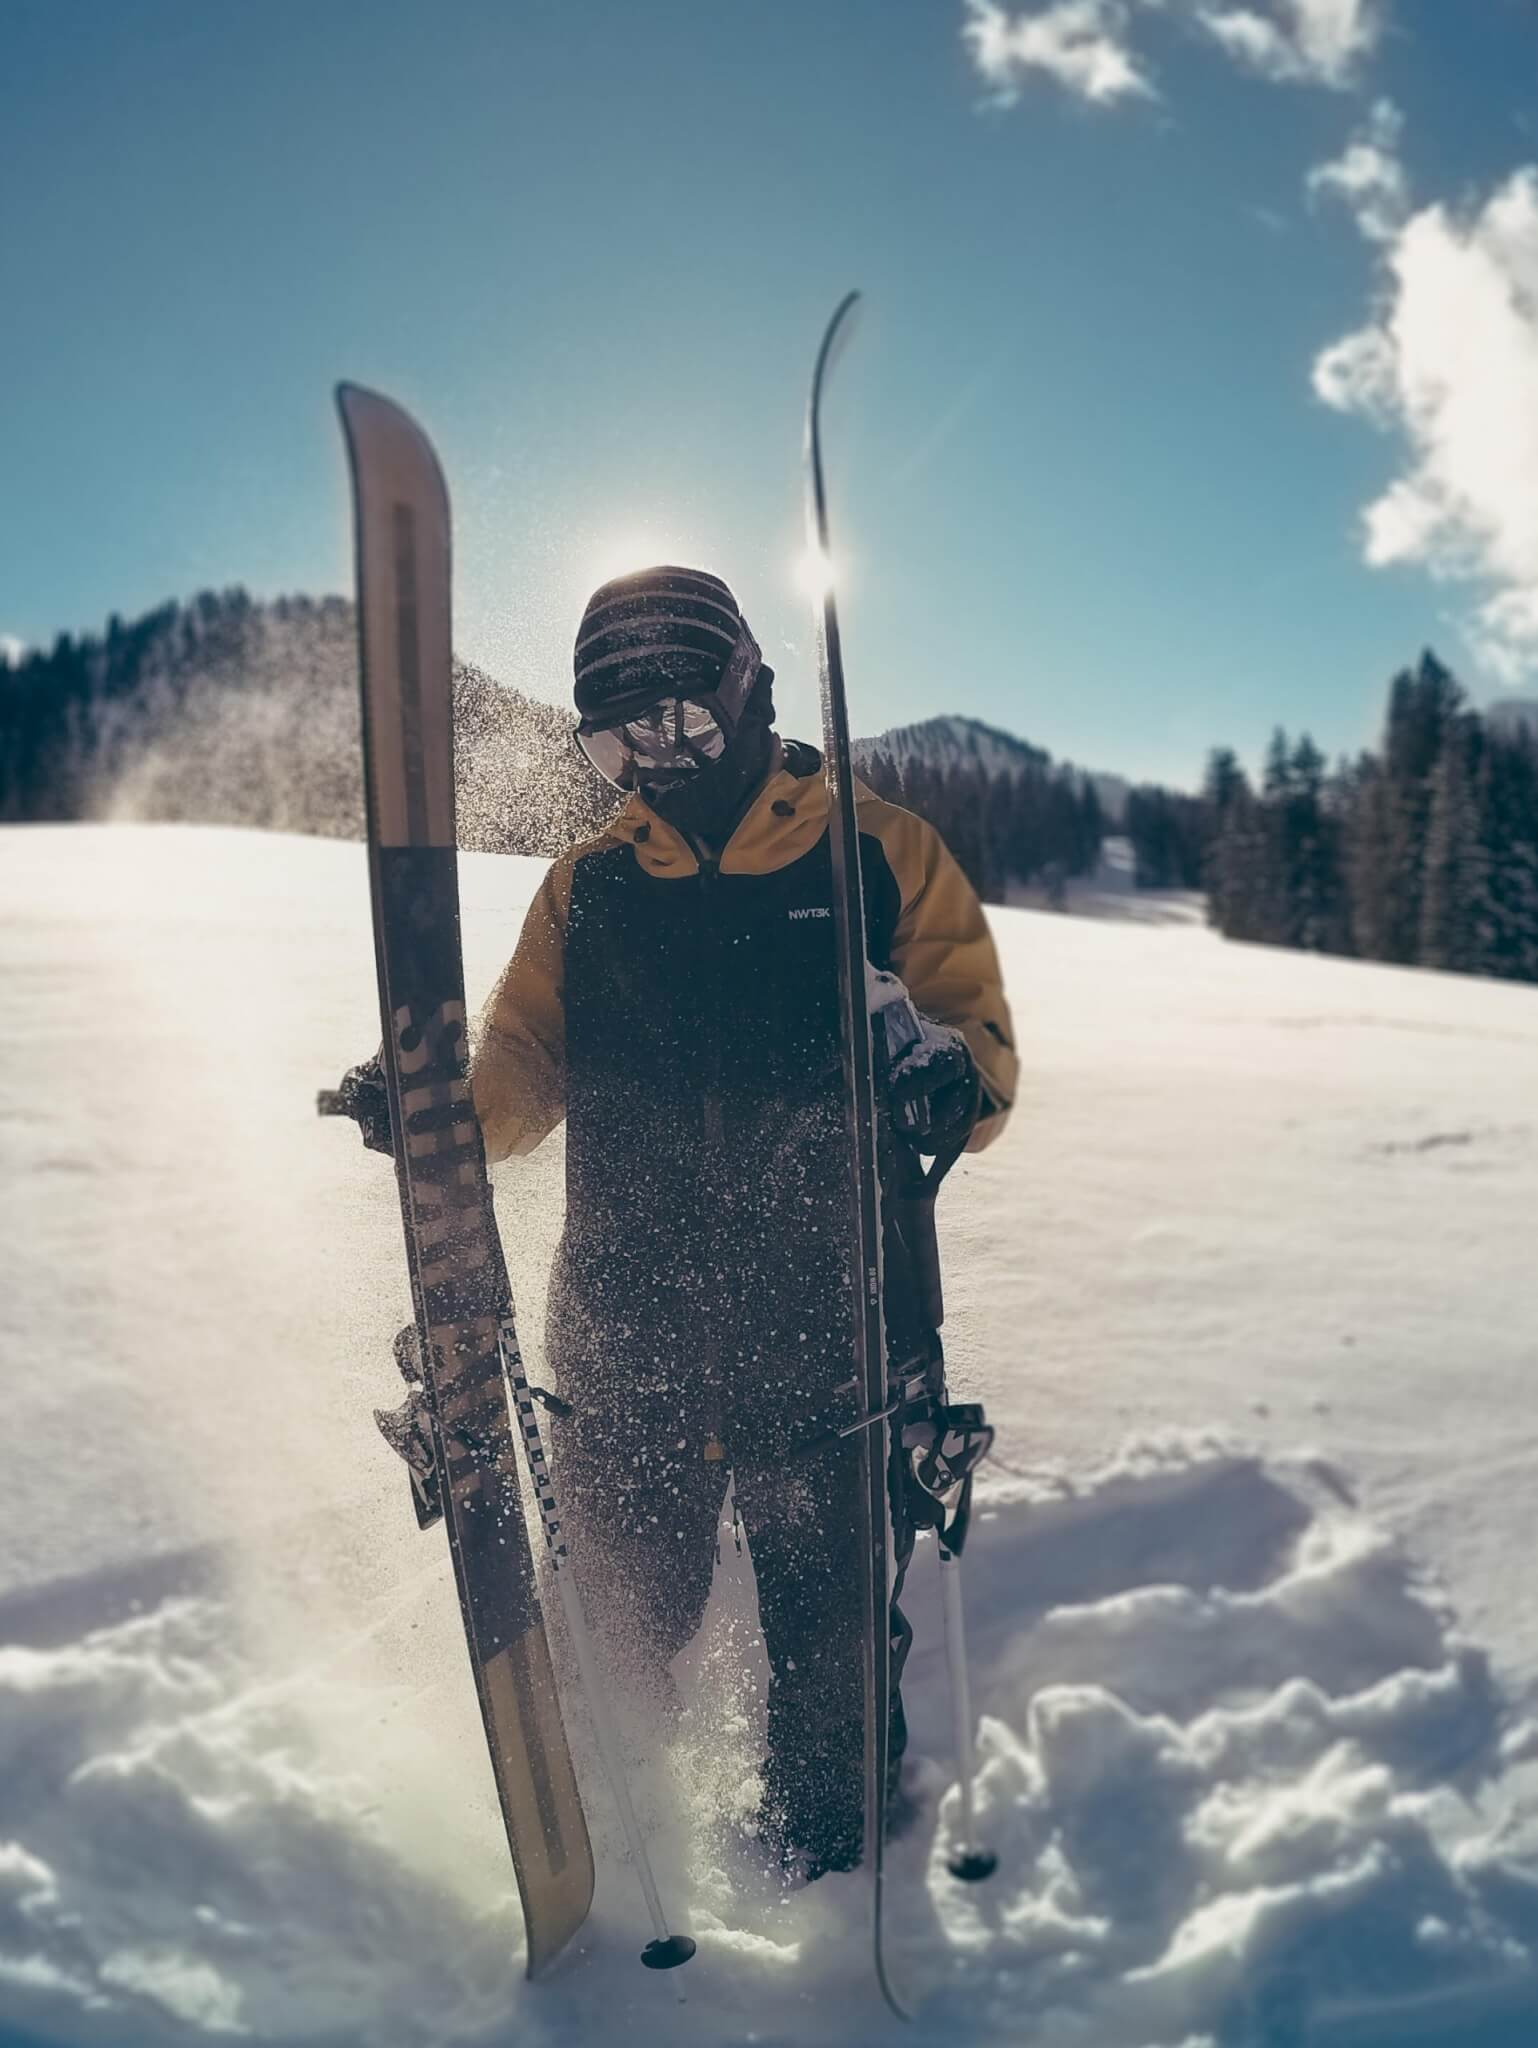 Skier slapping skis wearing NWT3K jacket made in USA